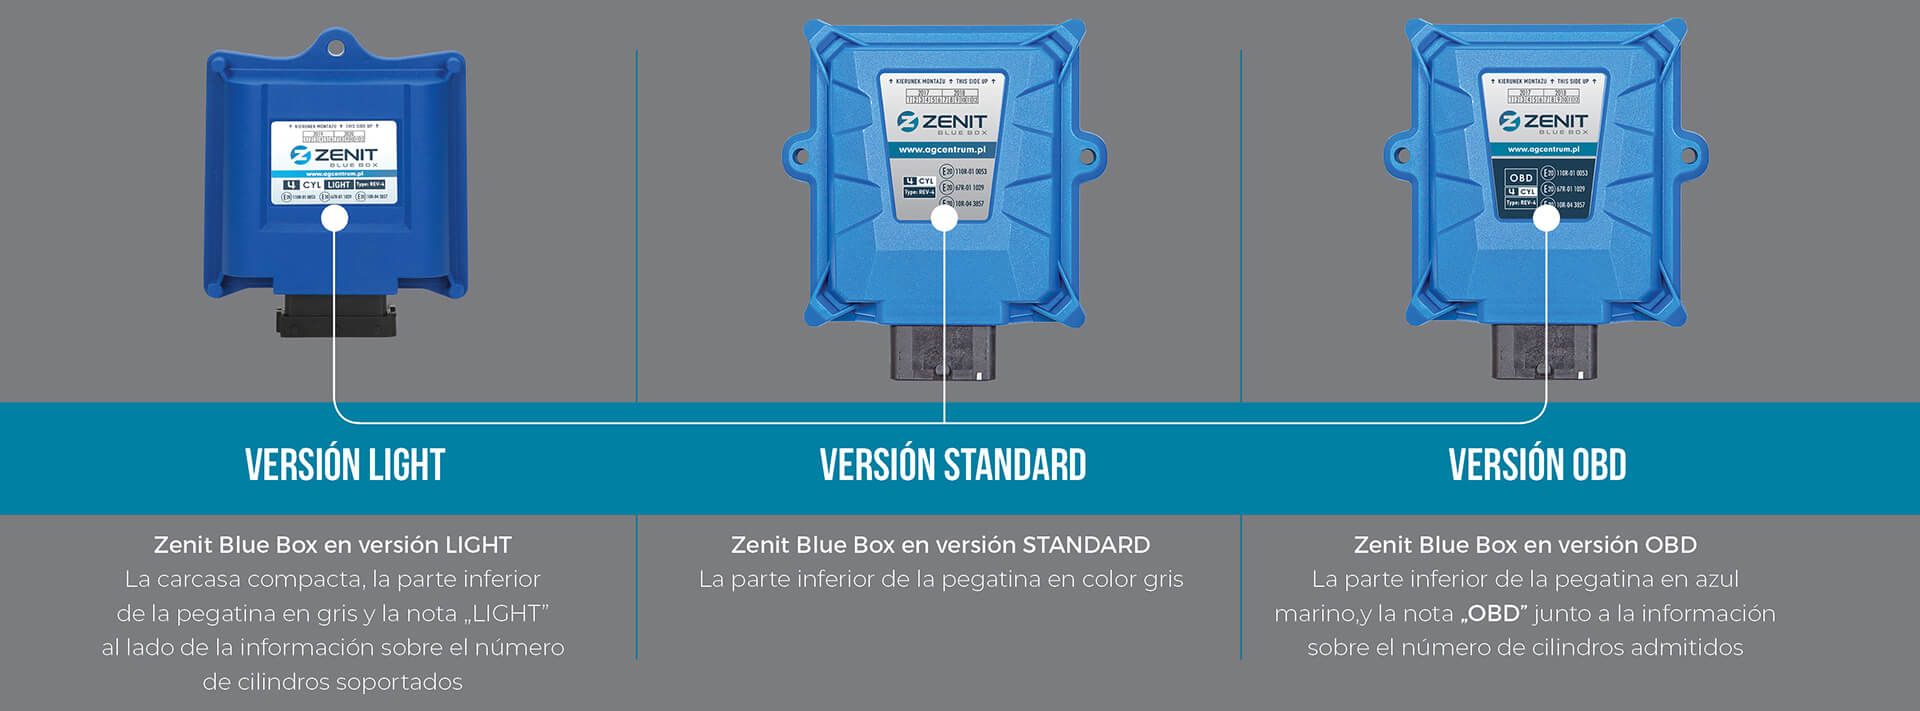 zenit blue box light autogas installations